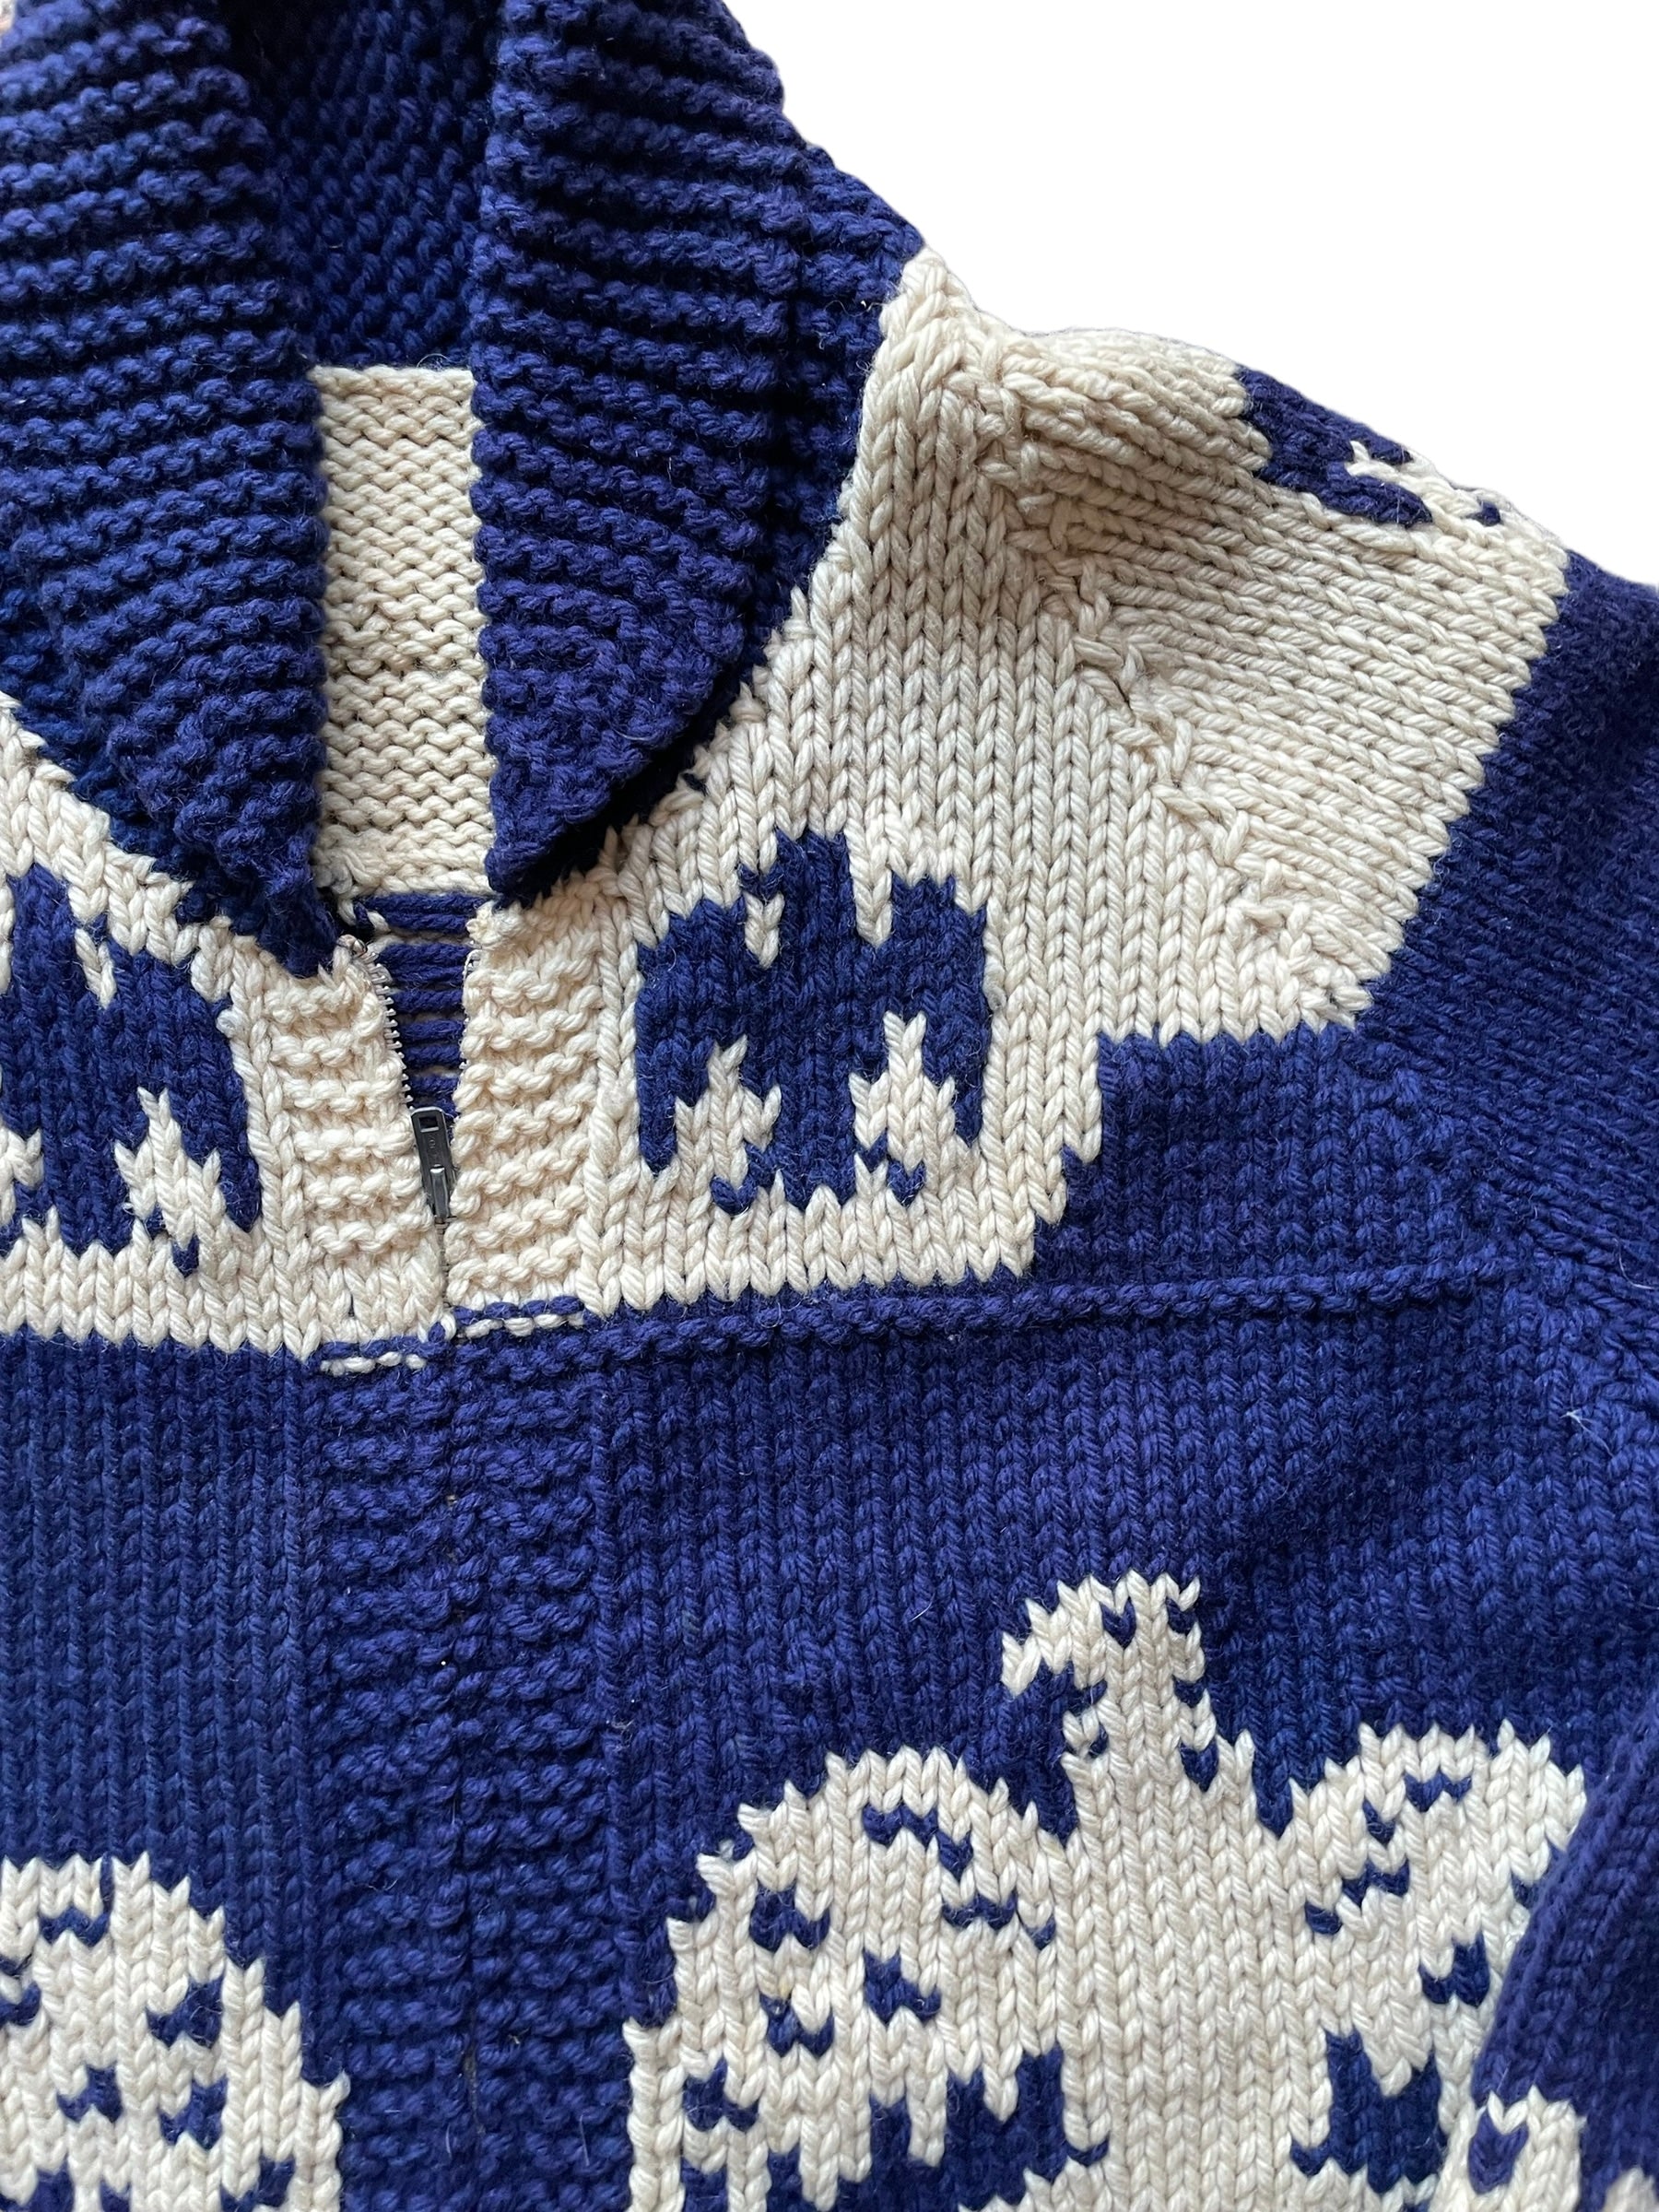 1950s eagle cowichan style sweater front view left shoulder